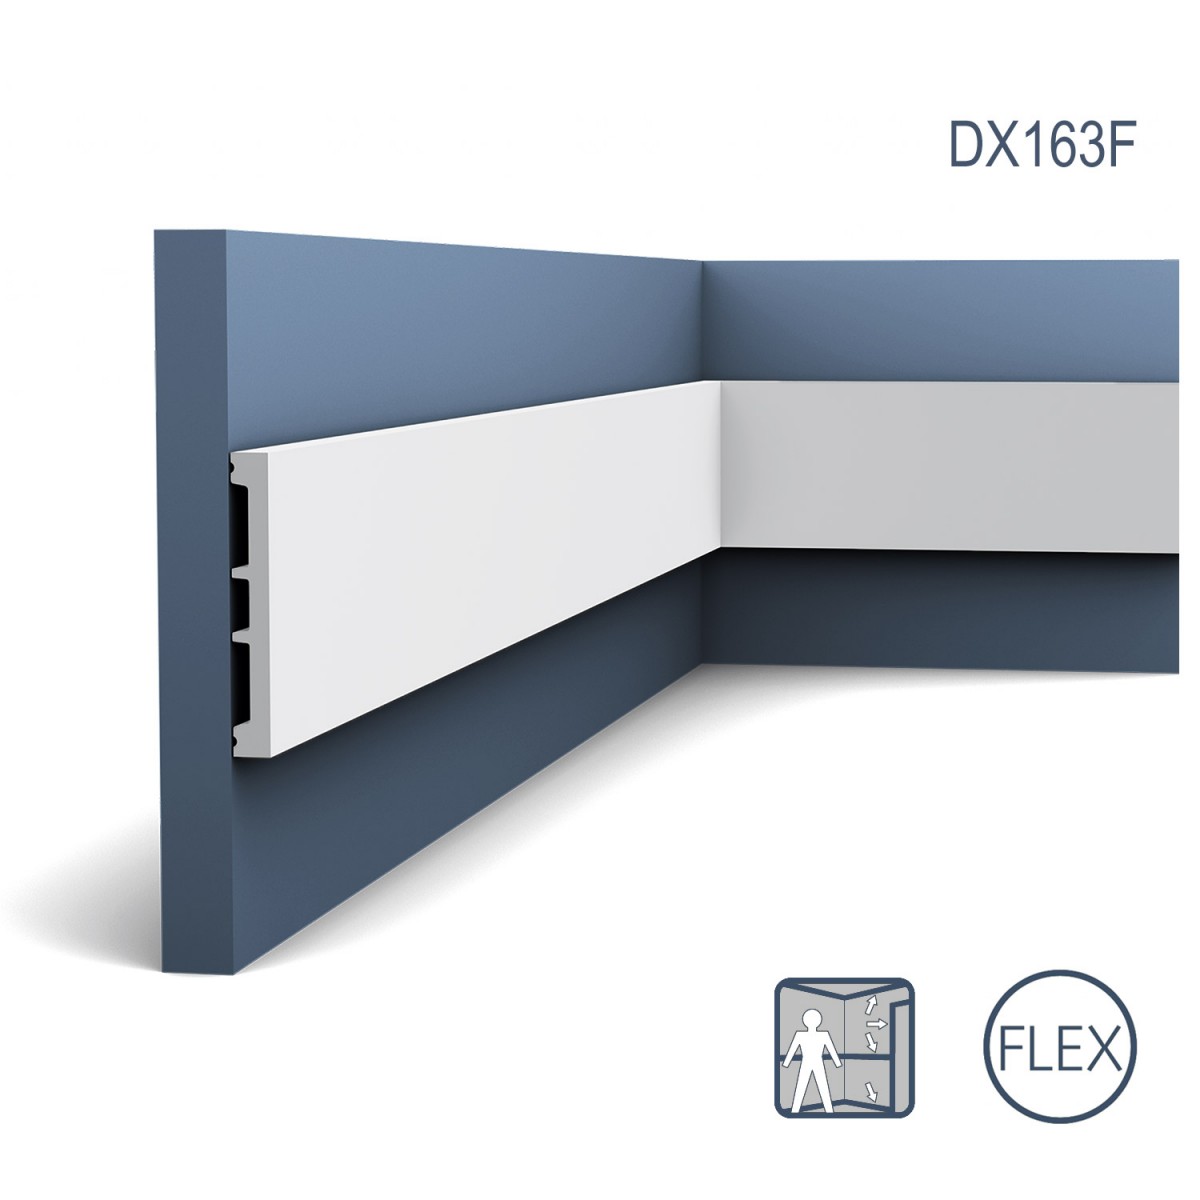 Plinta Flex Axxent SX163F, Dimensiuni: 200 X 1.3 X 10.2 cm, Orac Decor, Plinte decorative, Profile Decorative 